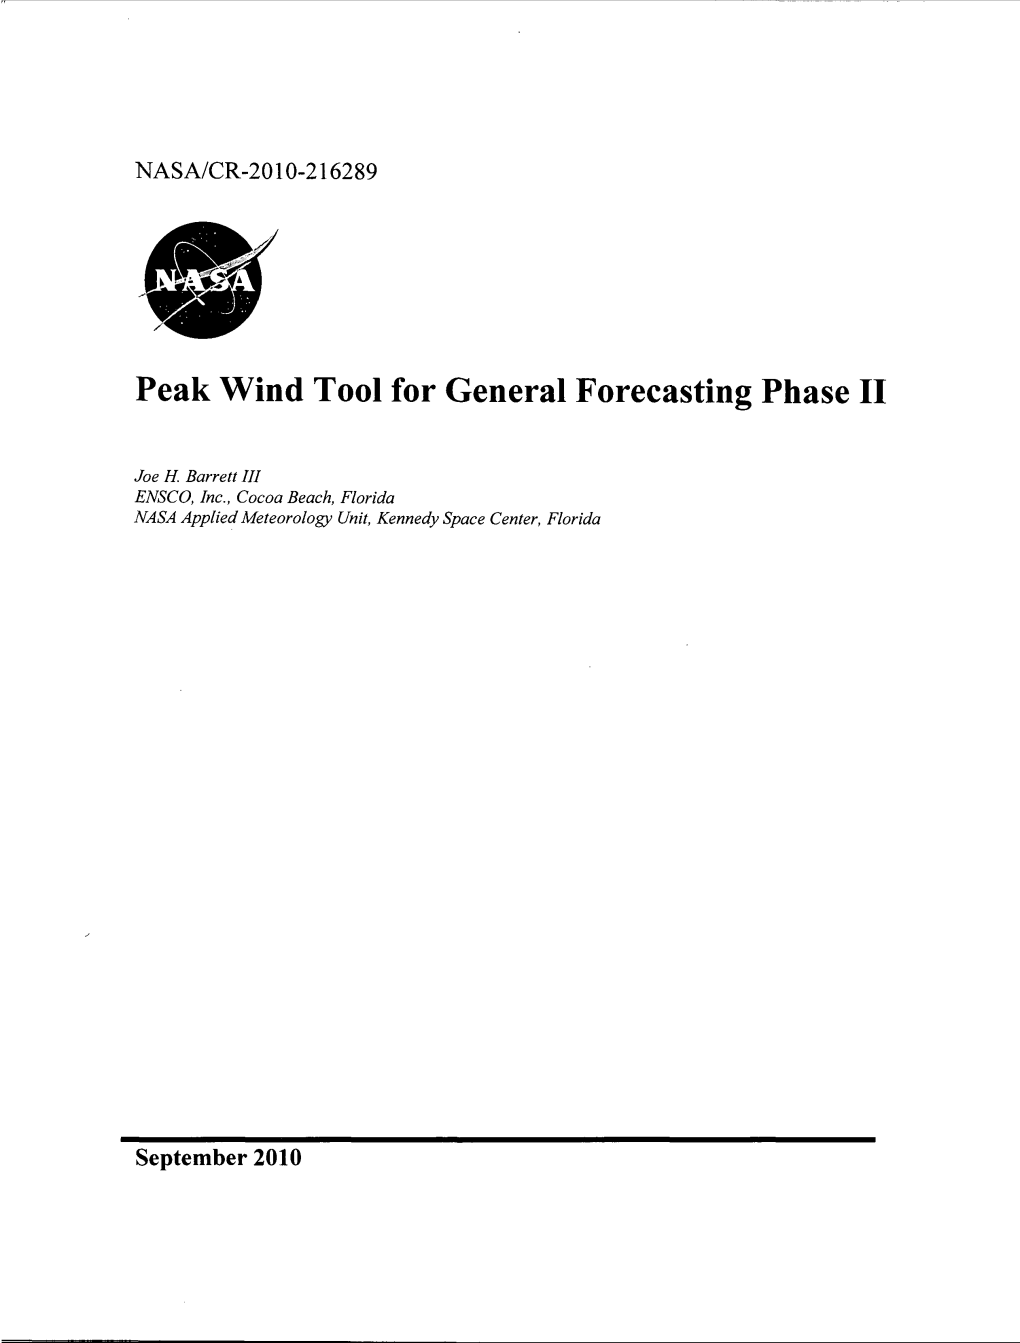 Peak Wind Tool for General Forecasting Phase II